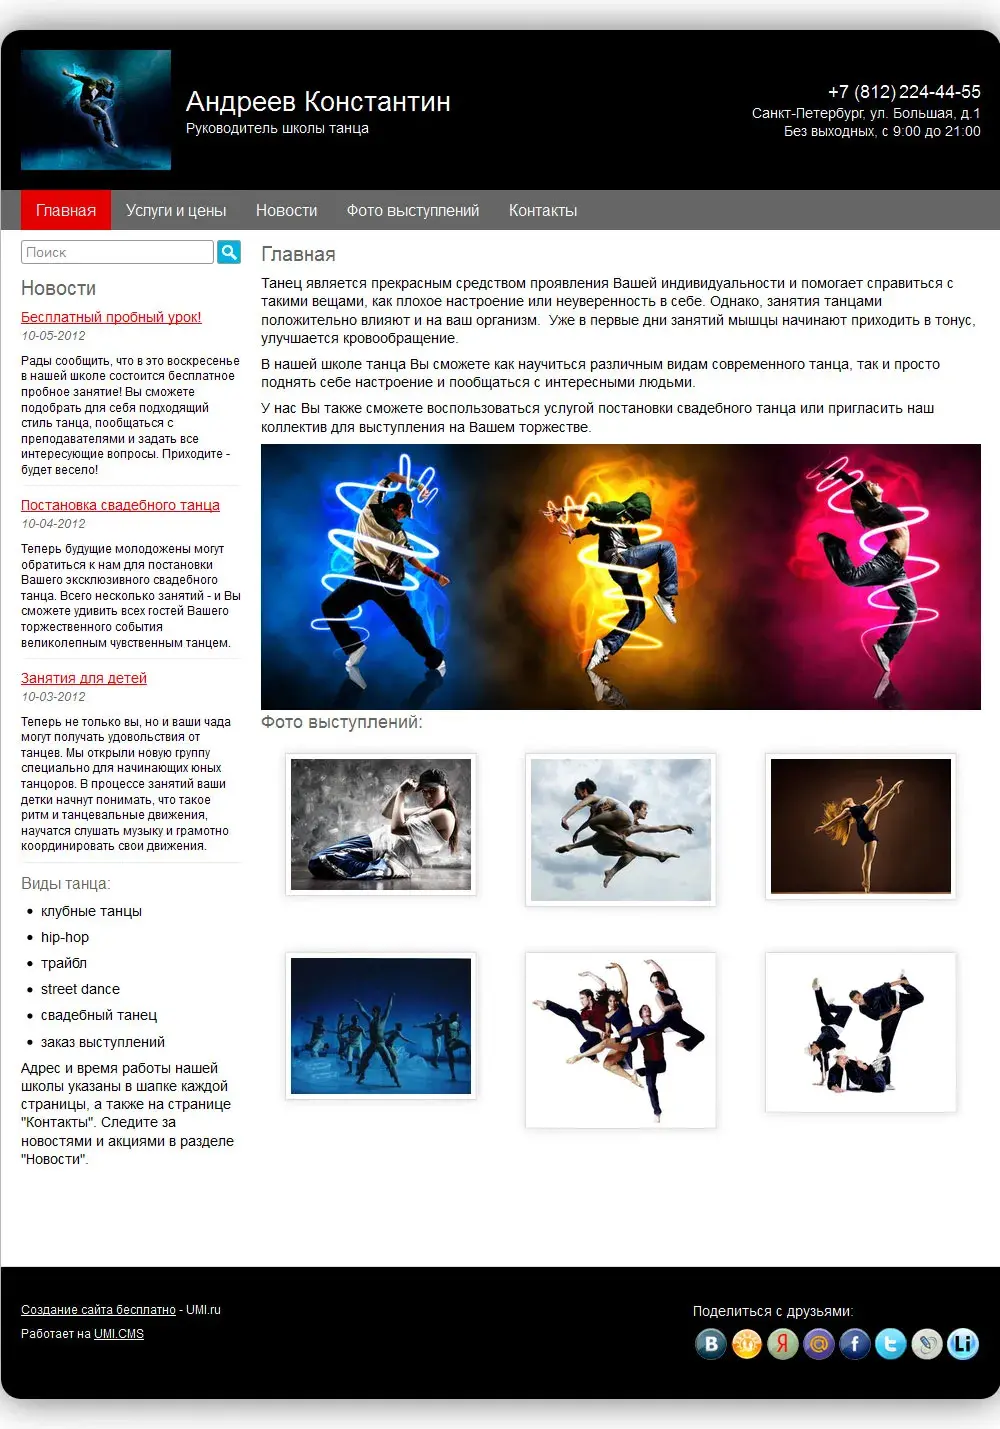 Сайт танцора